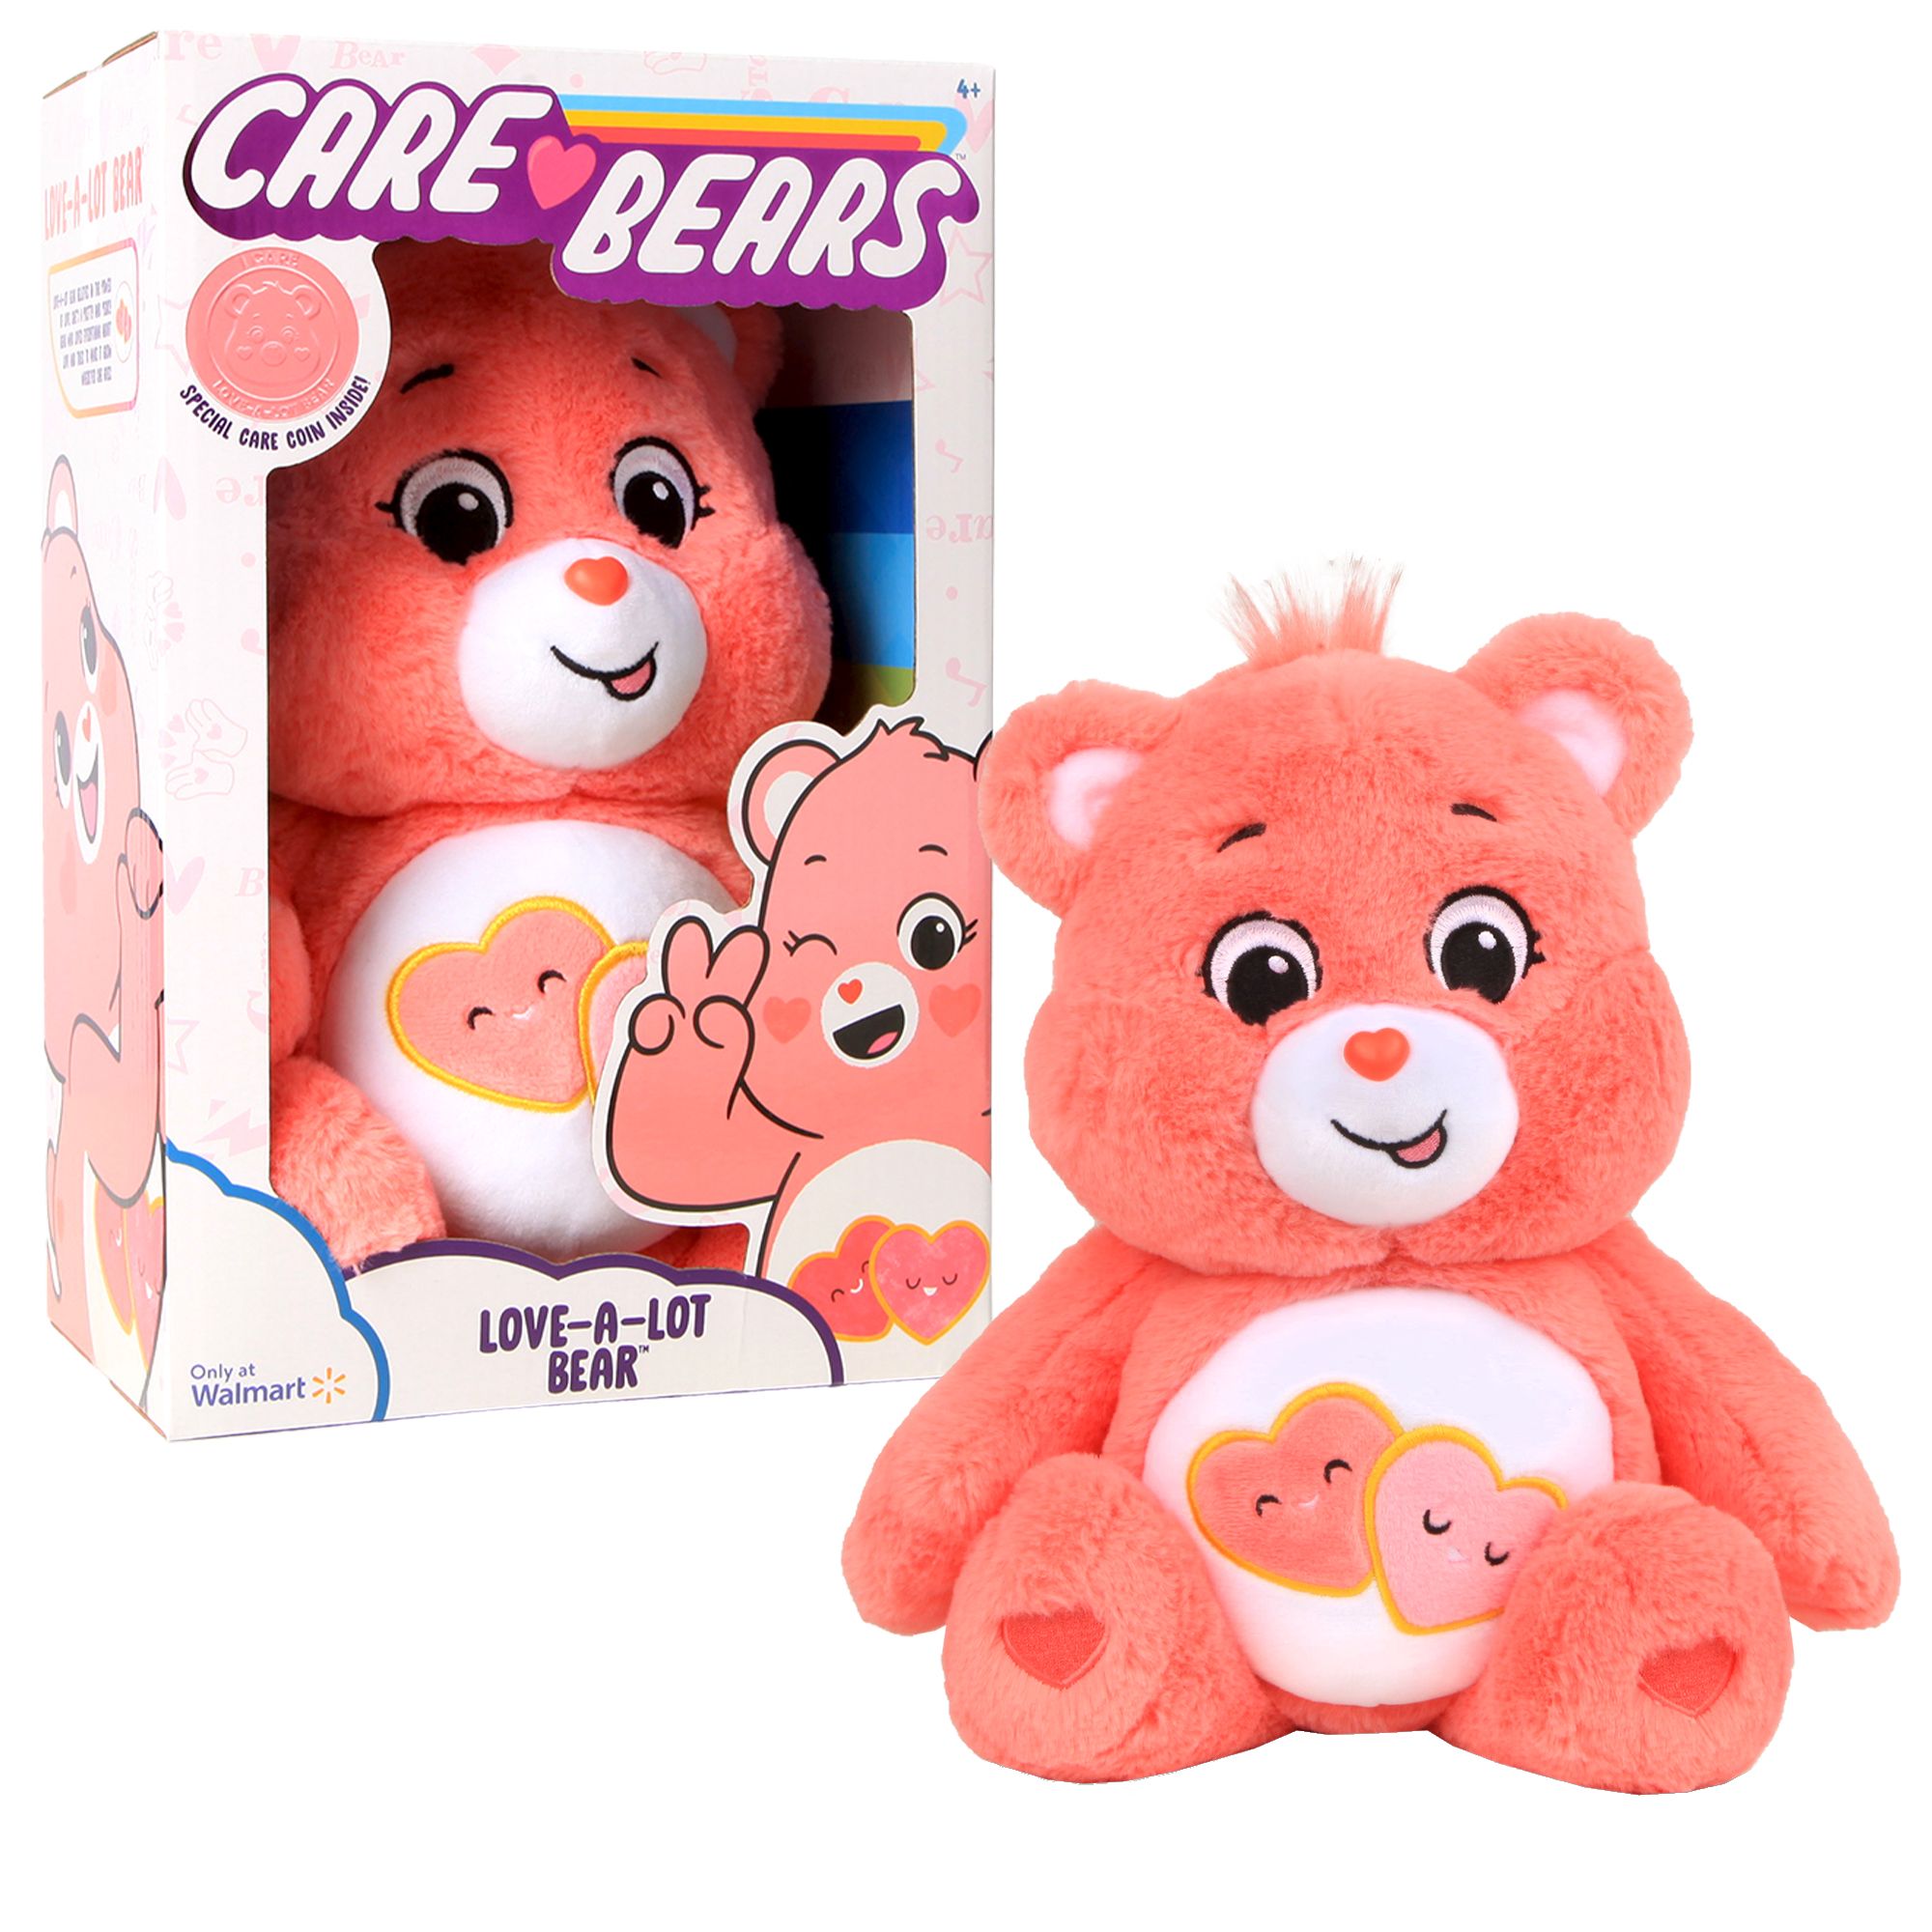 I LOVE LAYLA NEW Teddy Bear Cute Cuddly Gift Present Birthday Valentine Xmas 